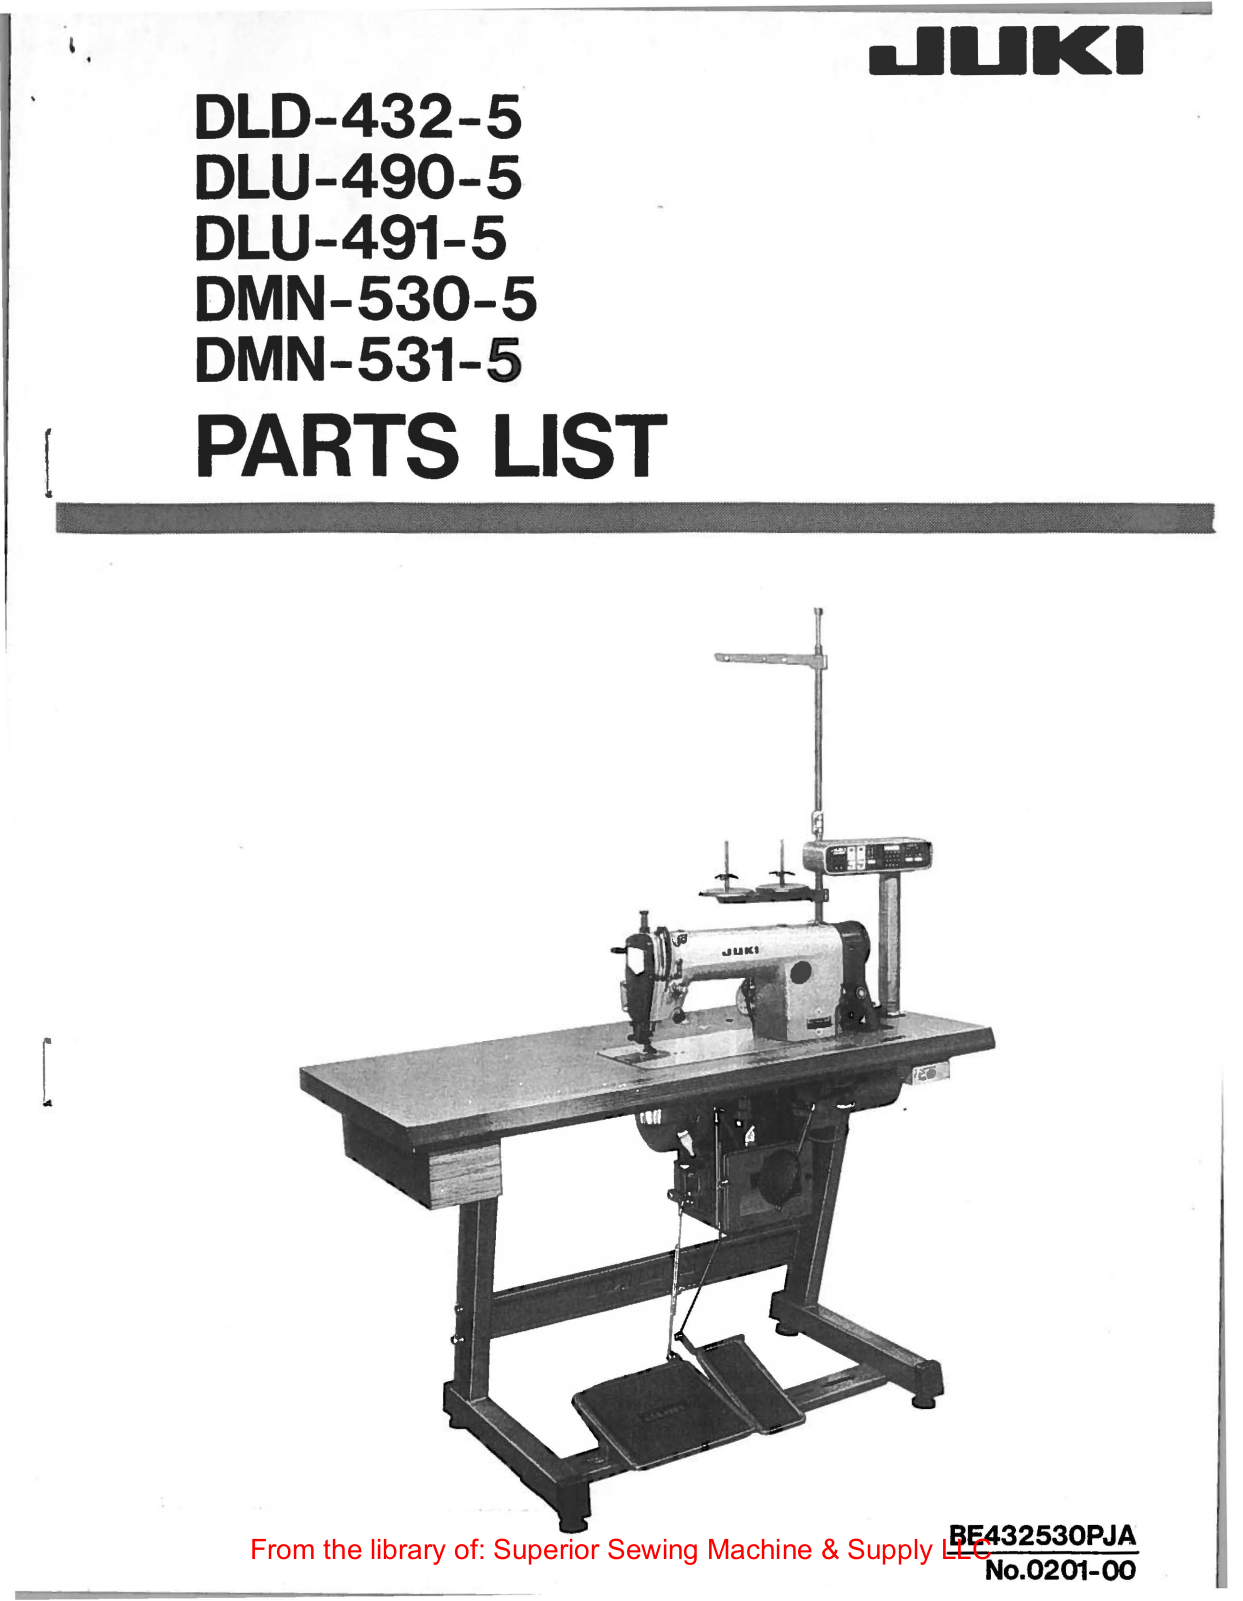 Juki DLD-432-5, DLU-490-5, DLU-491-5, DMN-530-5, DMN-531-5 Manual